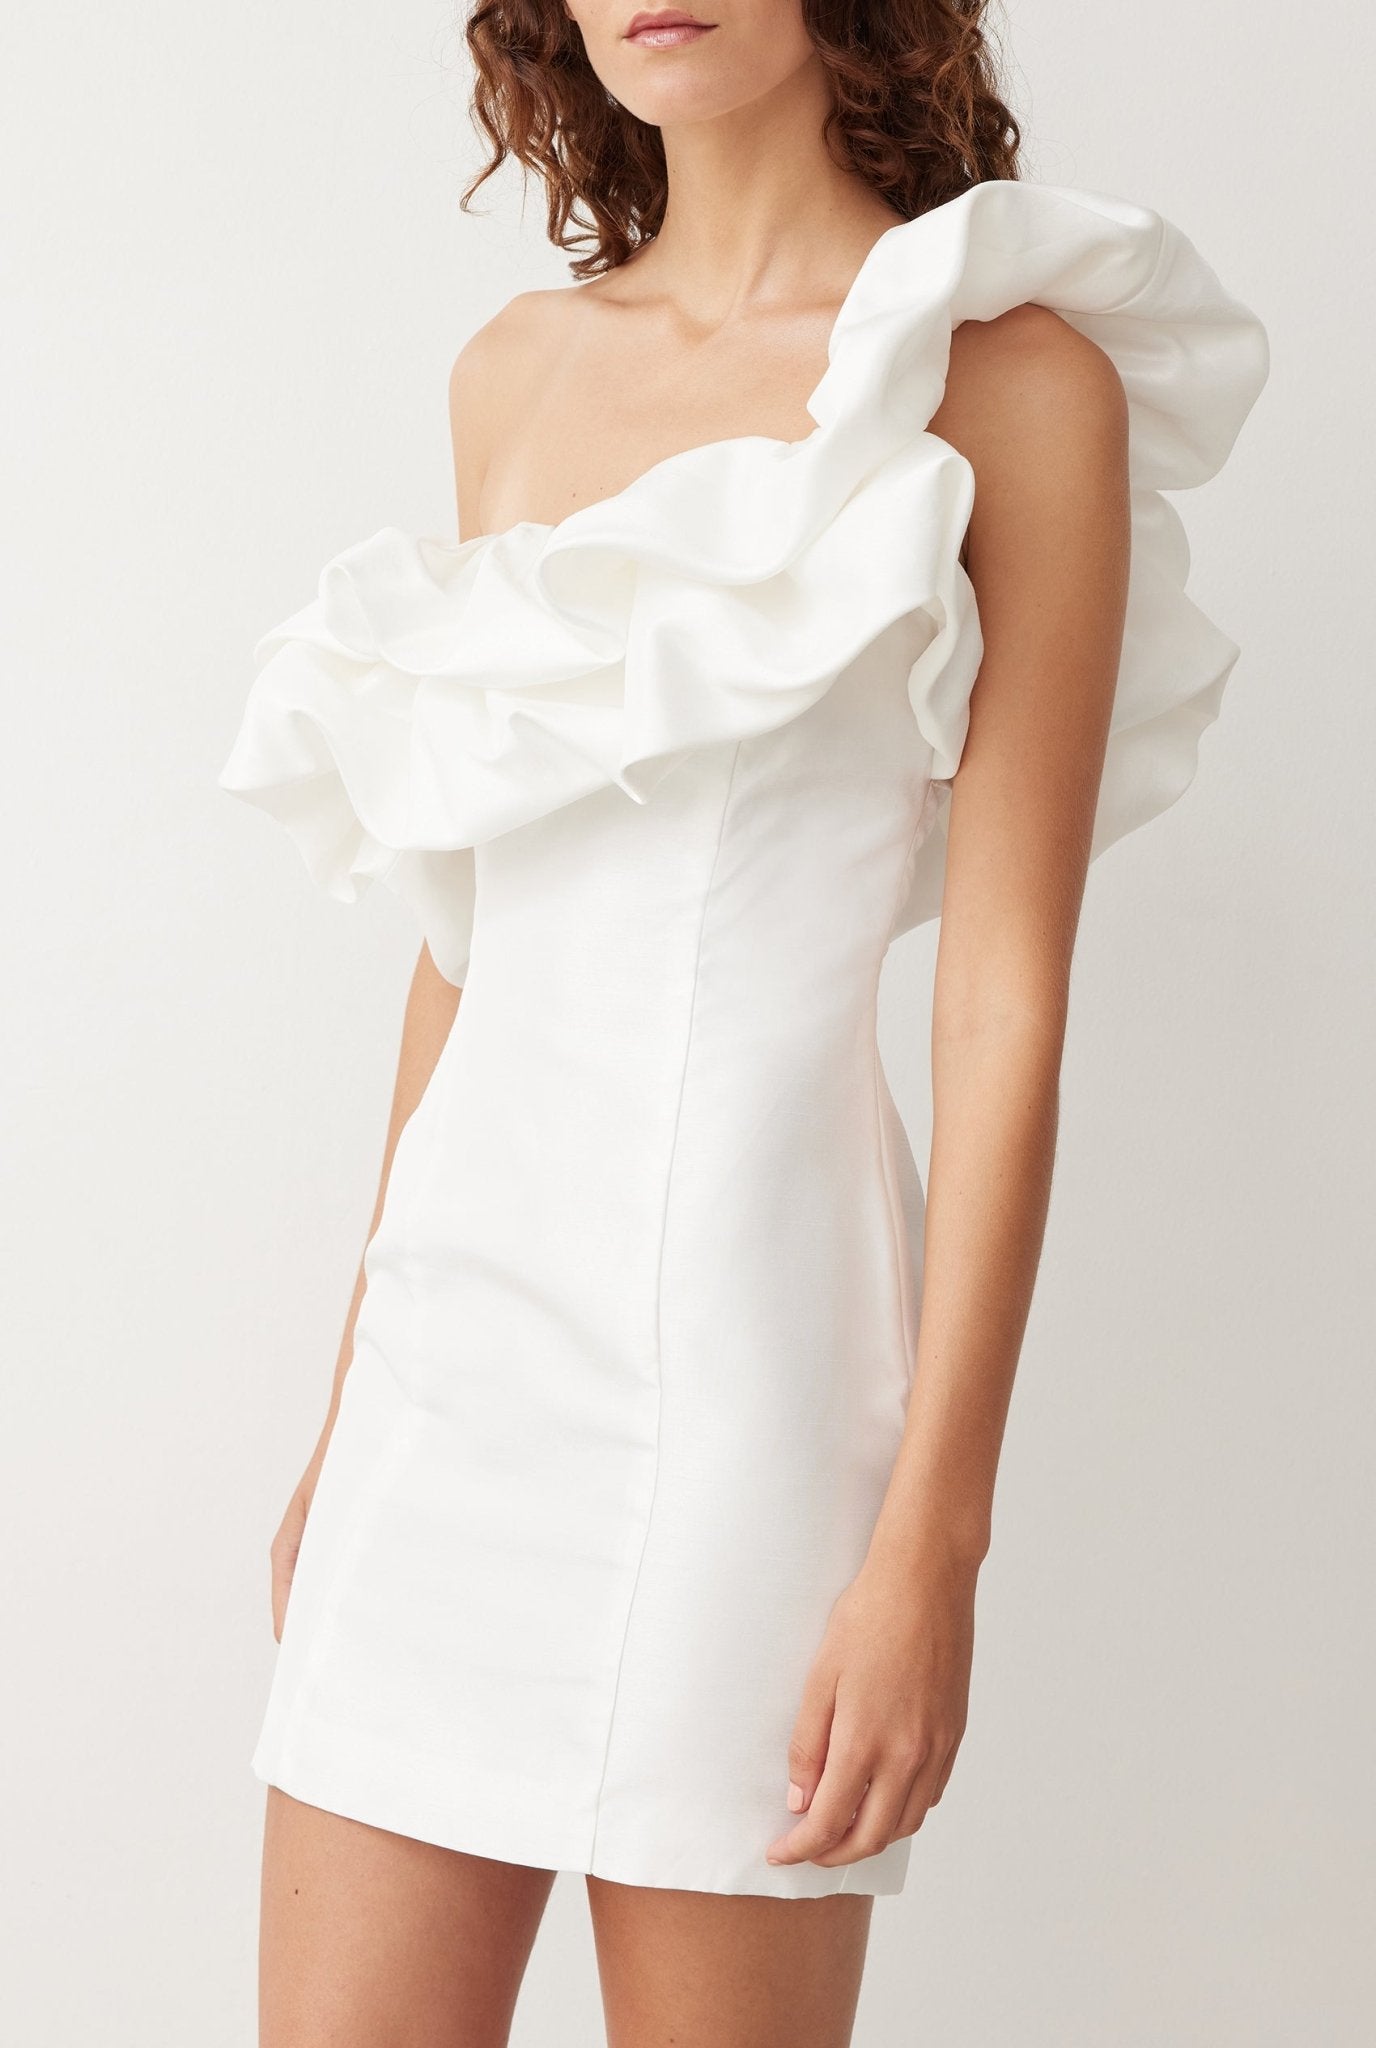 Clair Mini Dress in White - BOSKEMPER